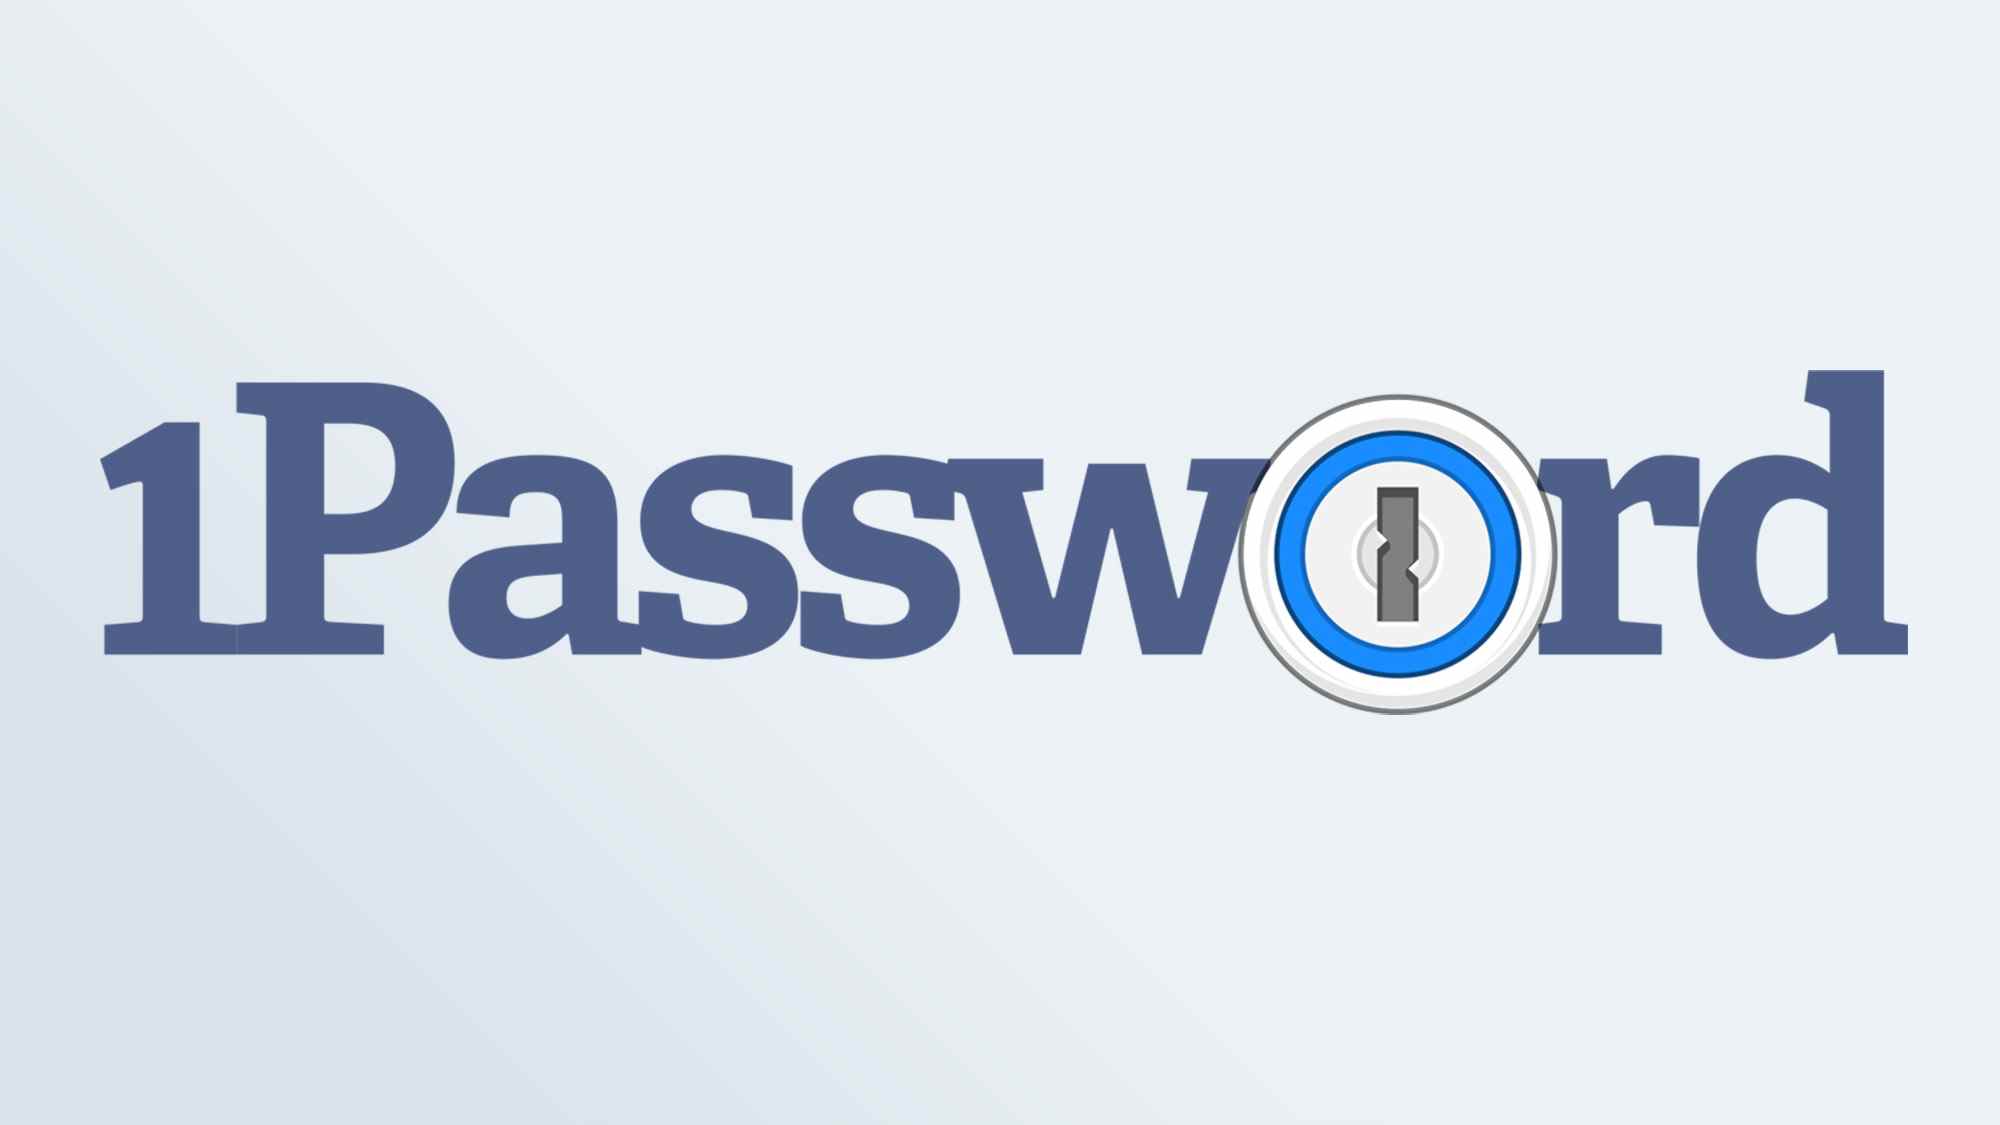 Le logo 1Password.